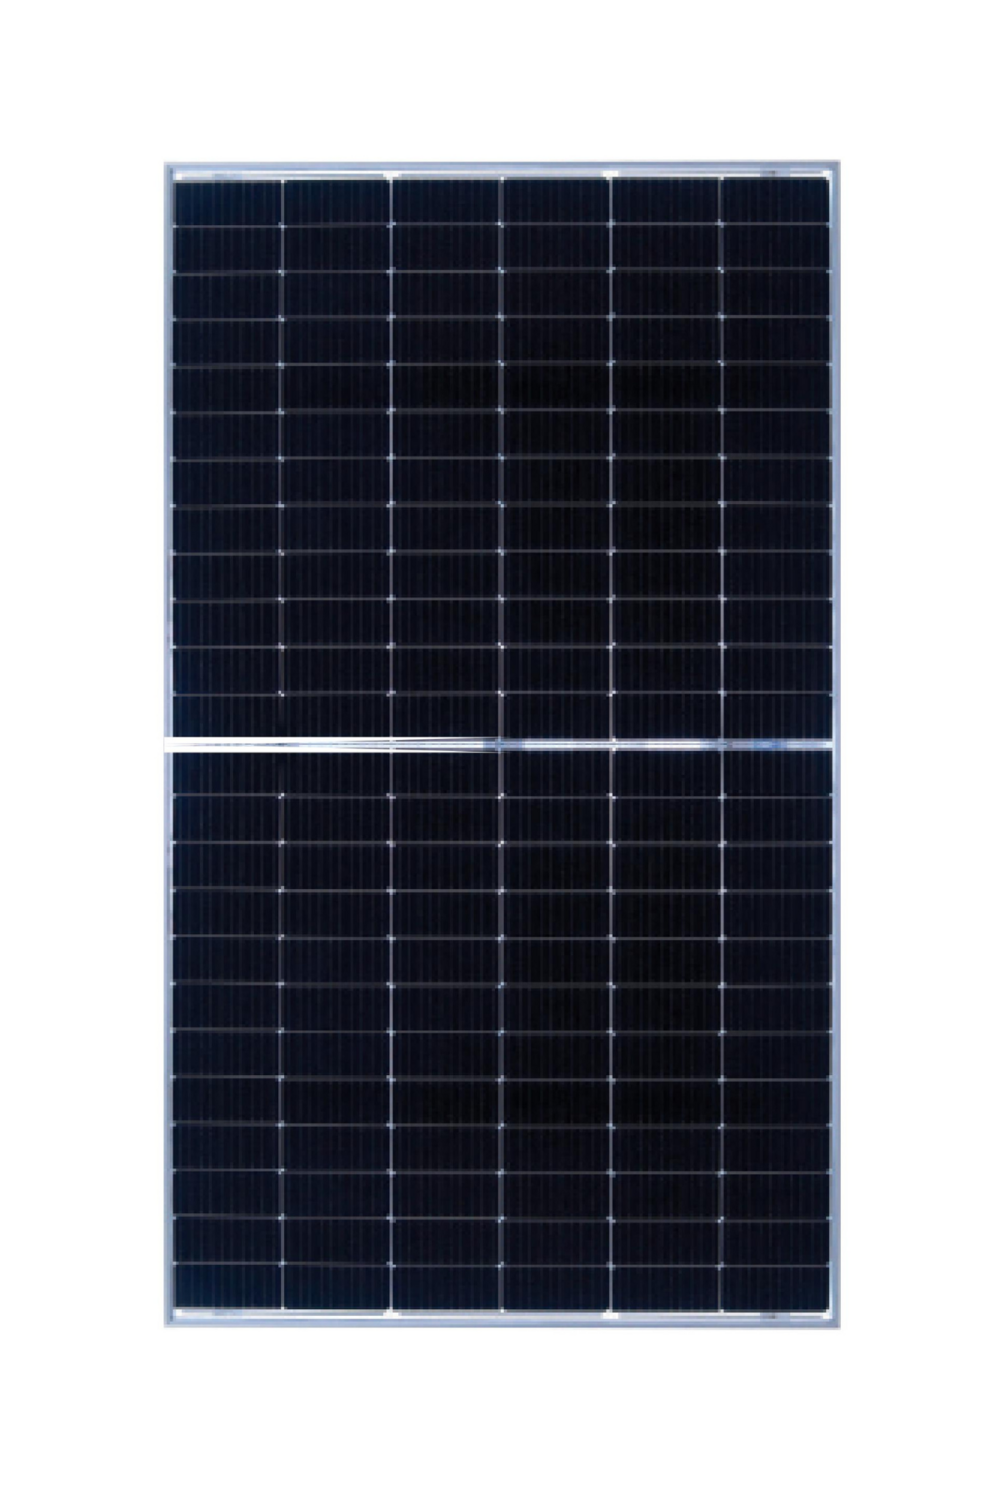 540 Watt DCR Mono Perc Solar Panel Made in India